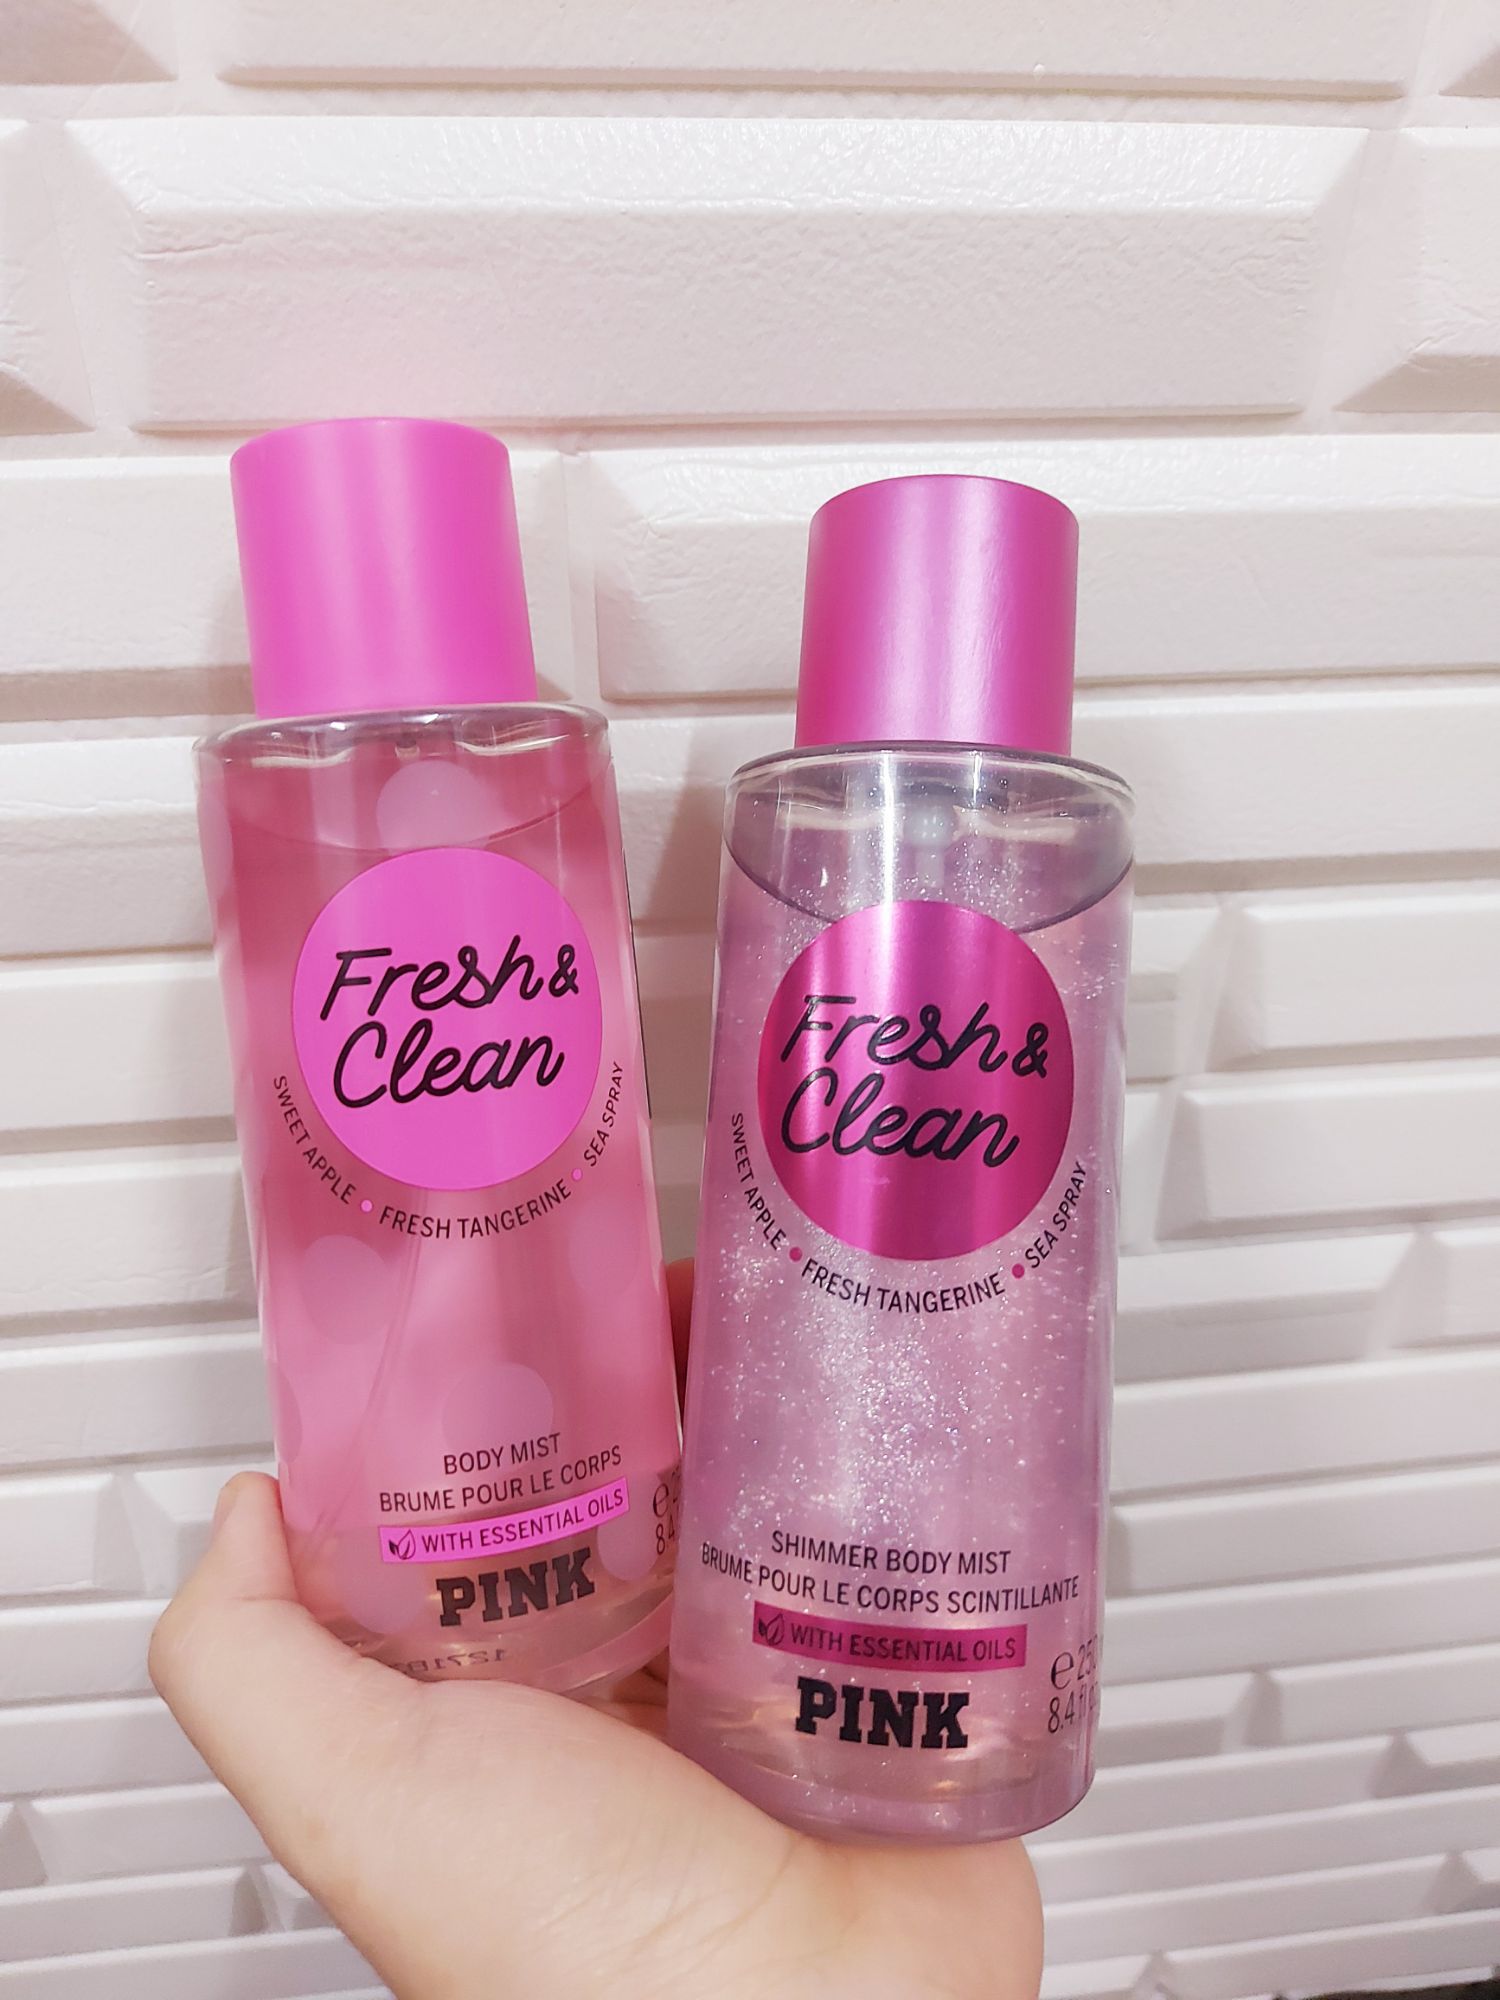 Original PINK Fresh & Clean by Victoria's Secret